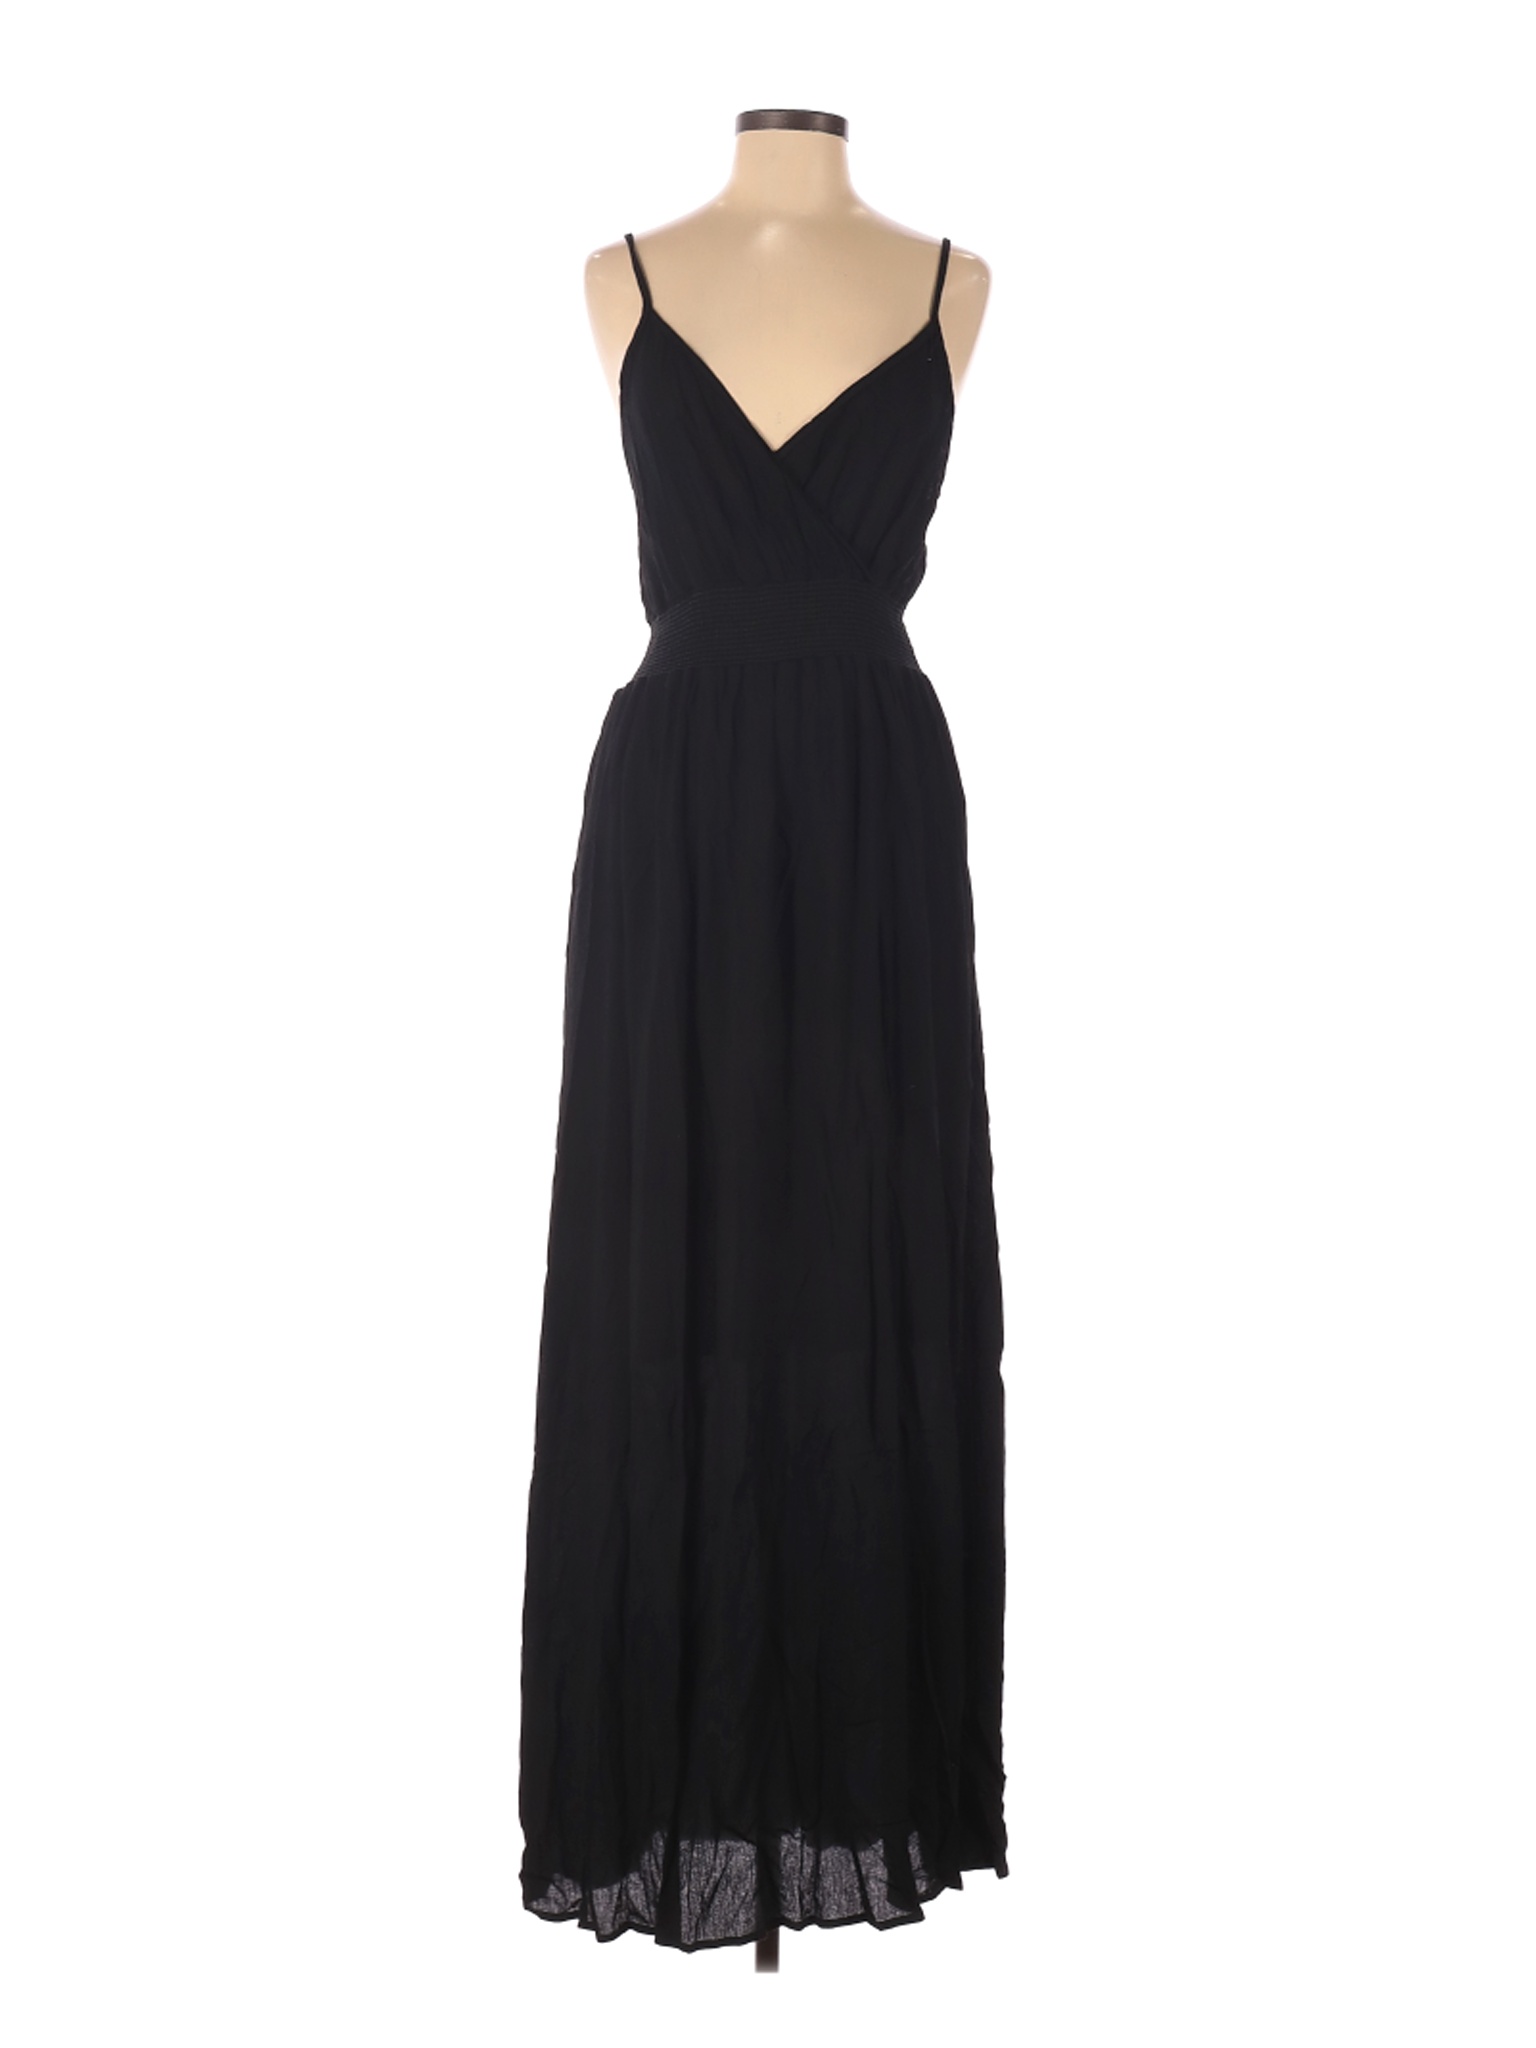 NWT West Kei Women Black Casual Dress M | eBay